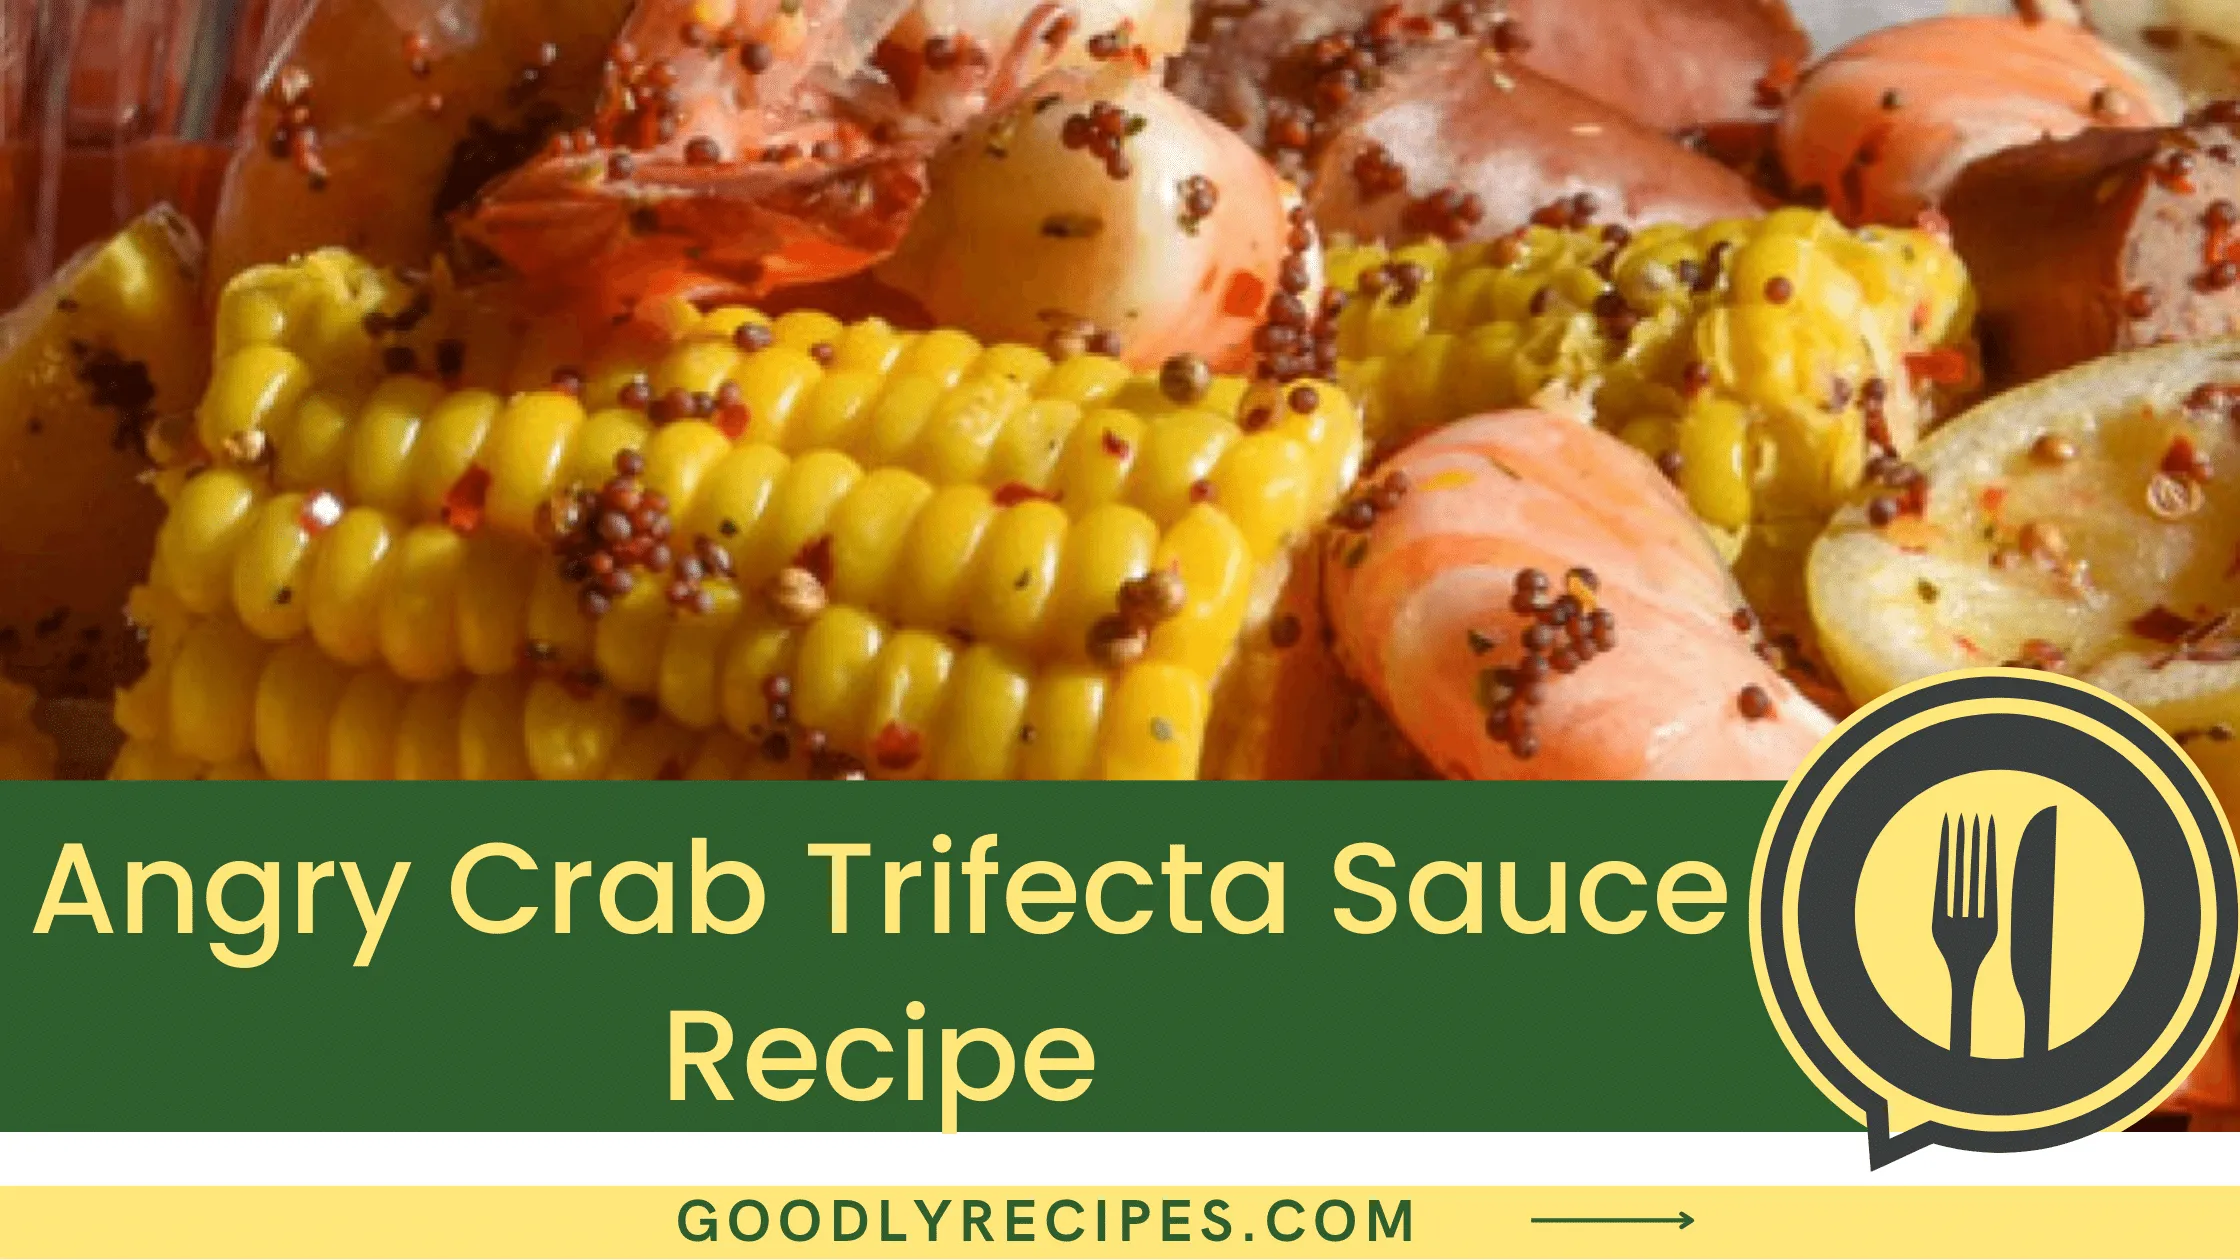 Angry Crab Trifecta Sauce Recipe